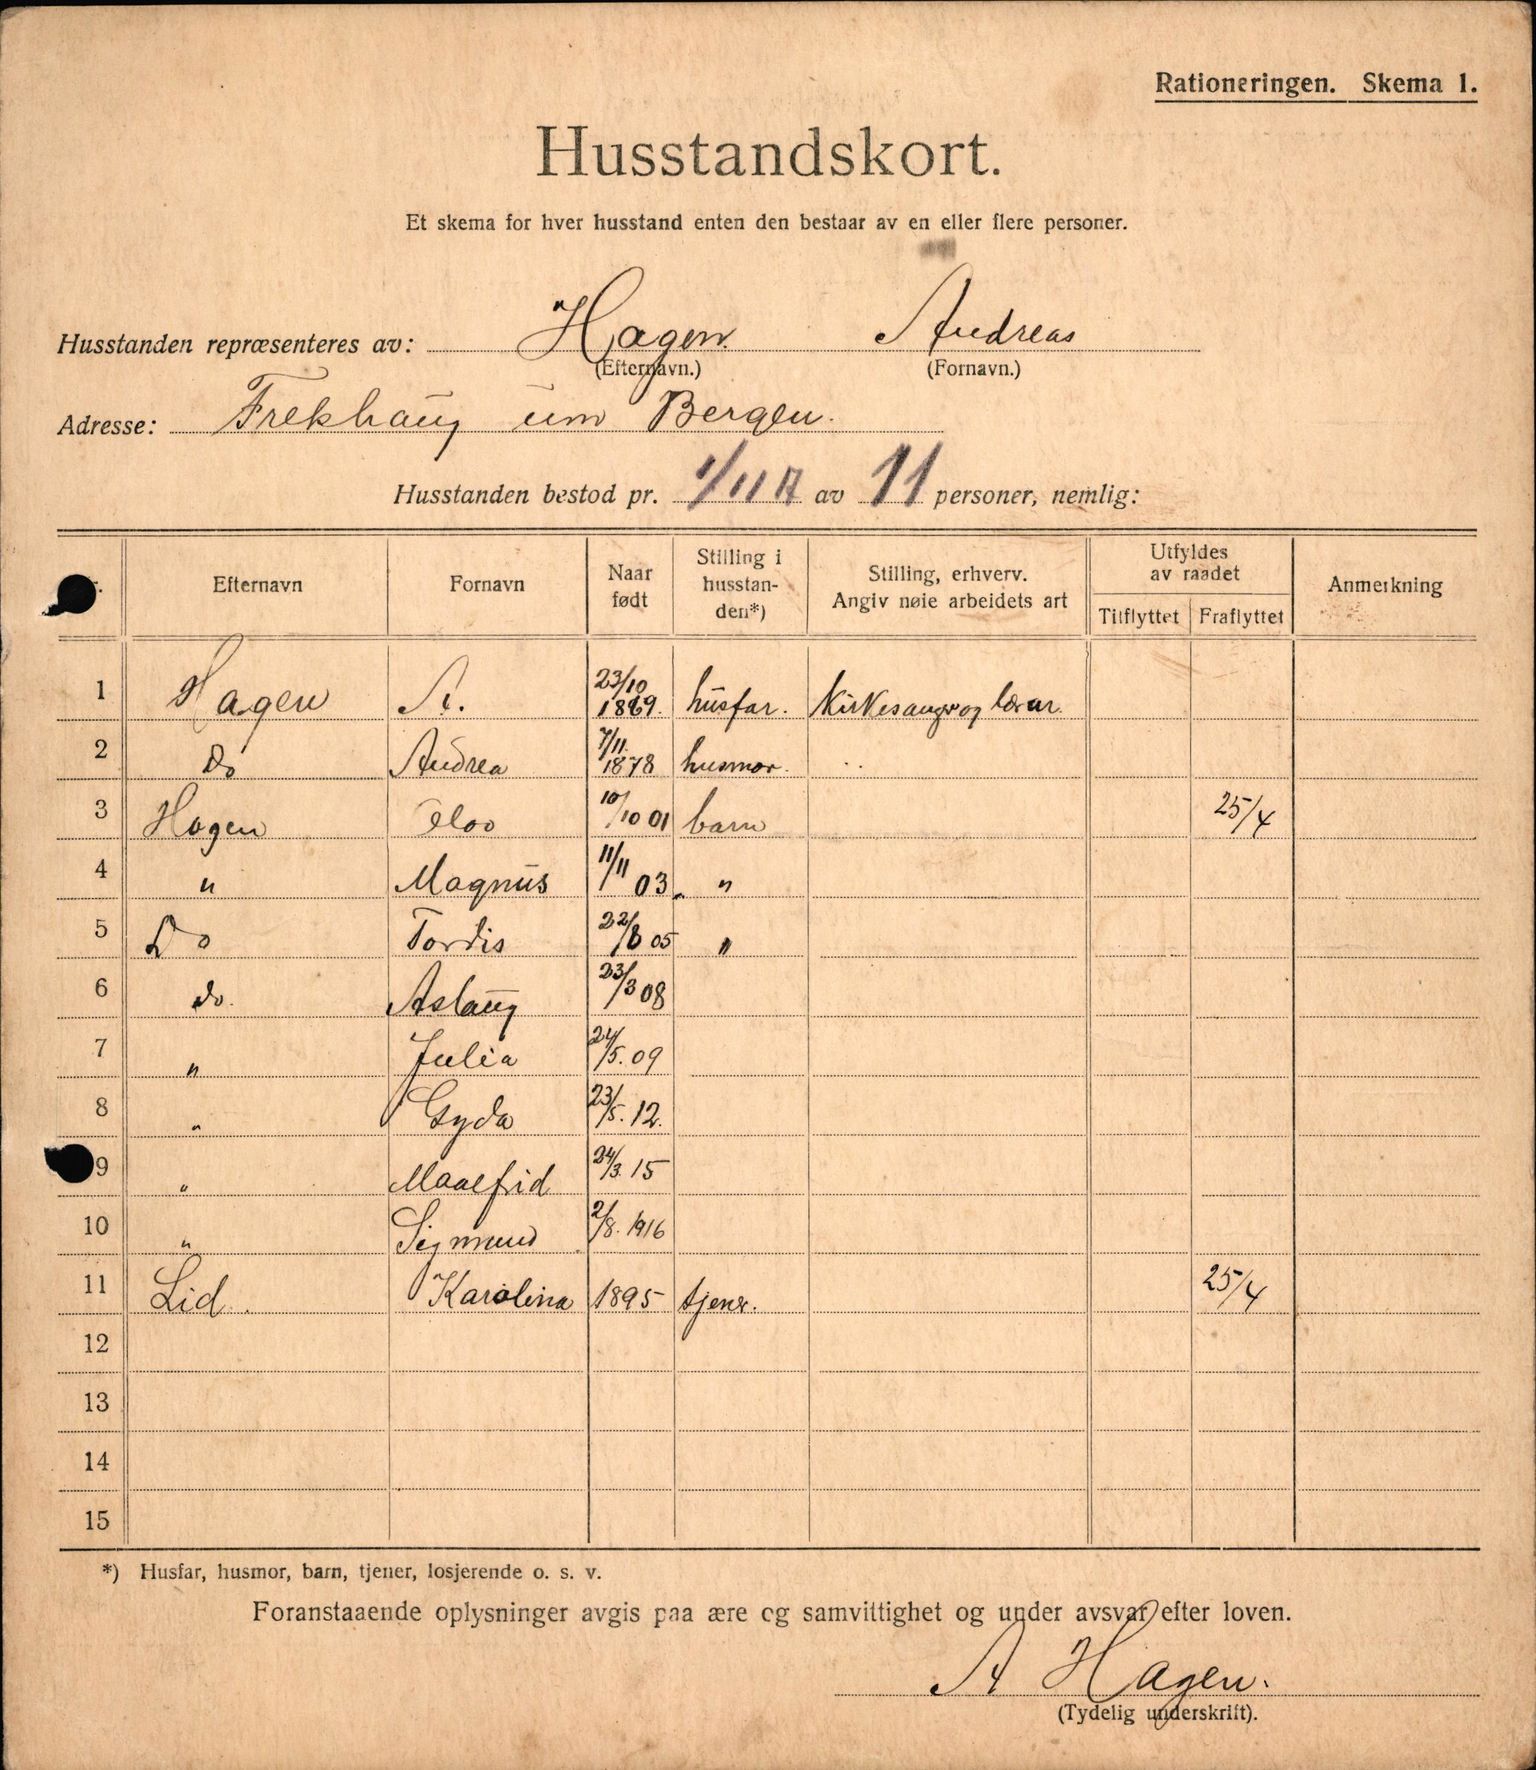 IKAH, Meland kommune, Provianteringsrådet, Husstander per 01.11.1917, 1917-1918, s. 158